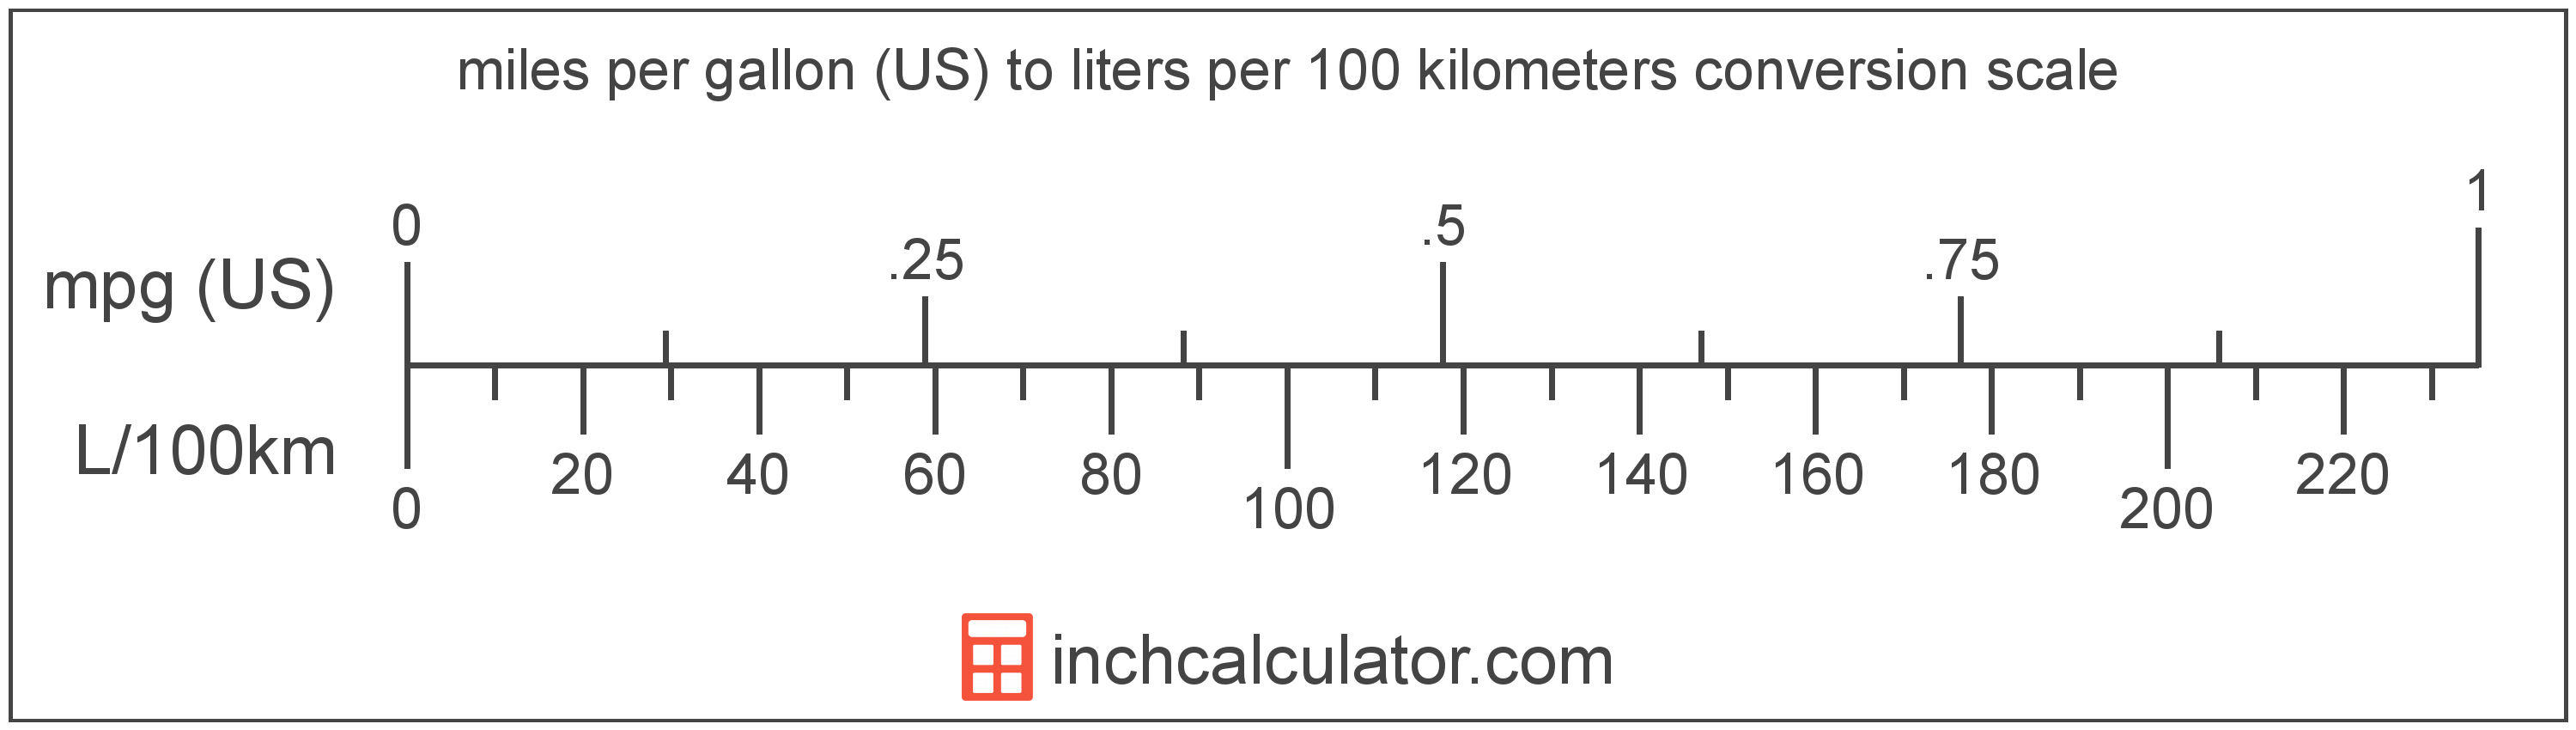 conversion scale showing liters per 100 kilometers and equivalent miles per gallon (US) fuel economy values